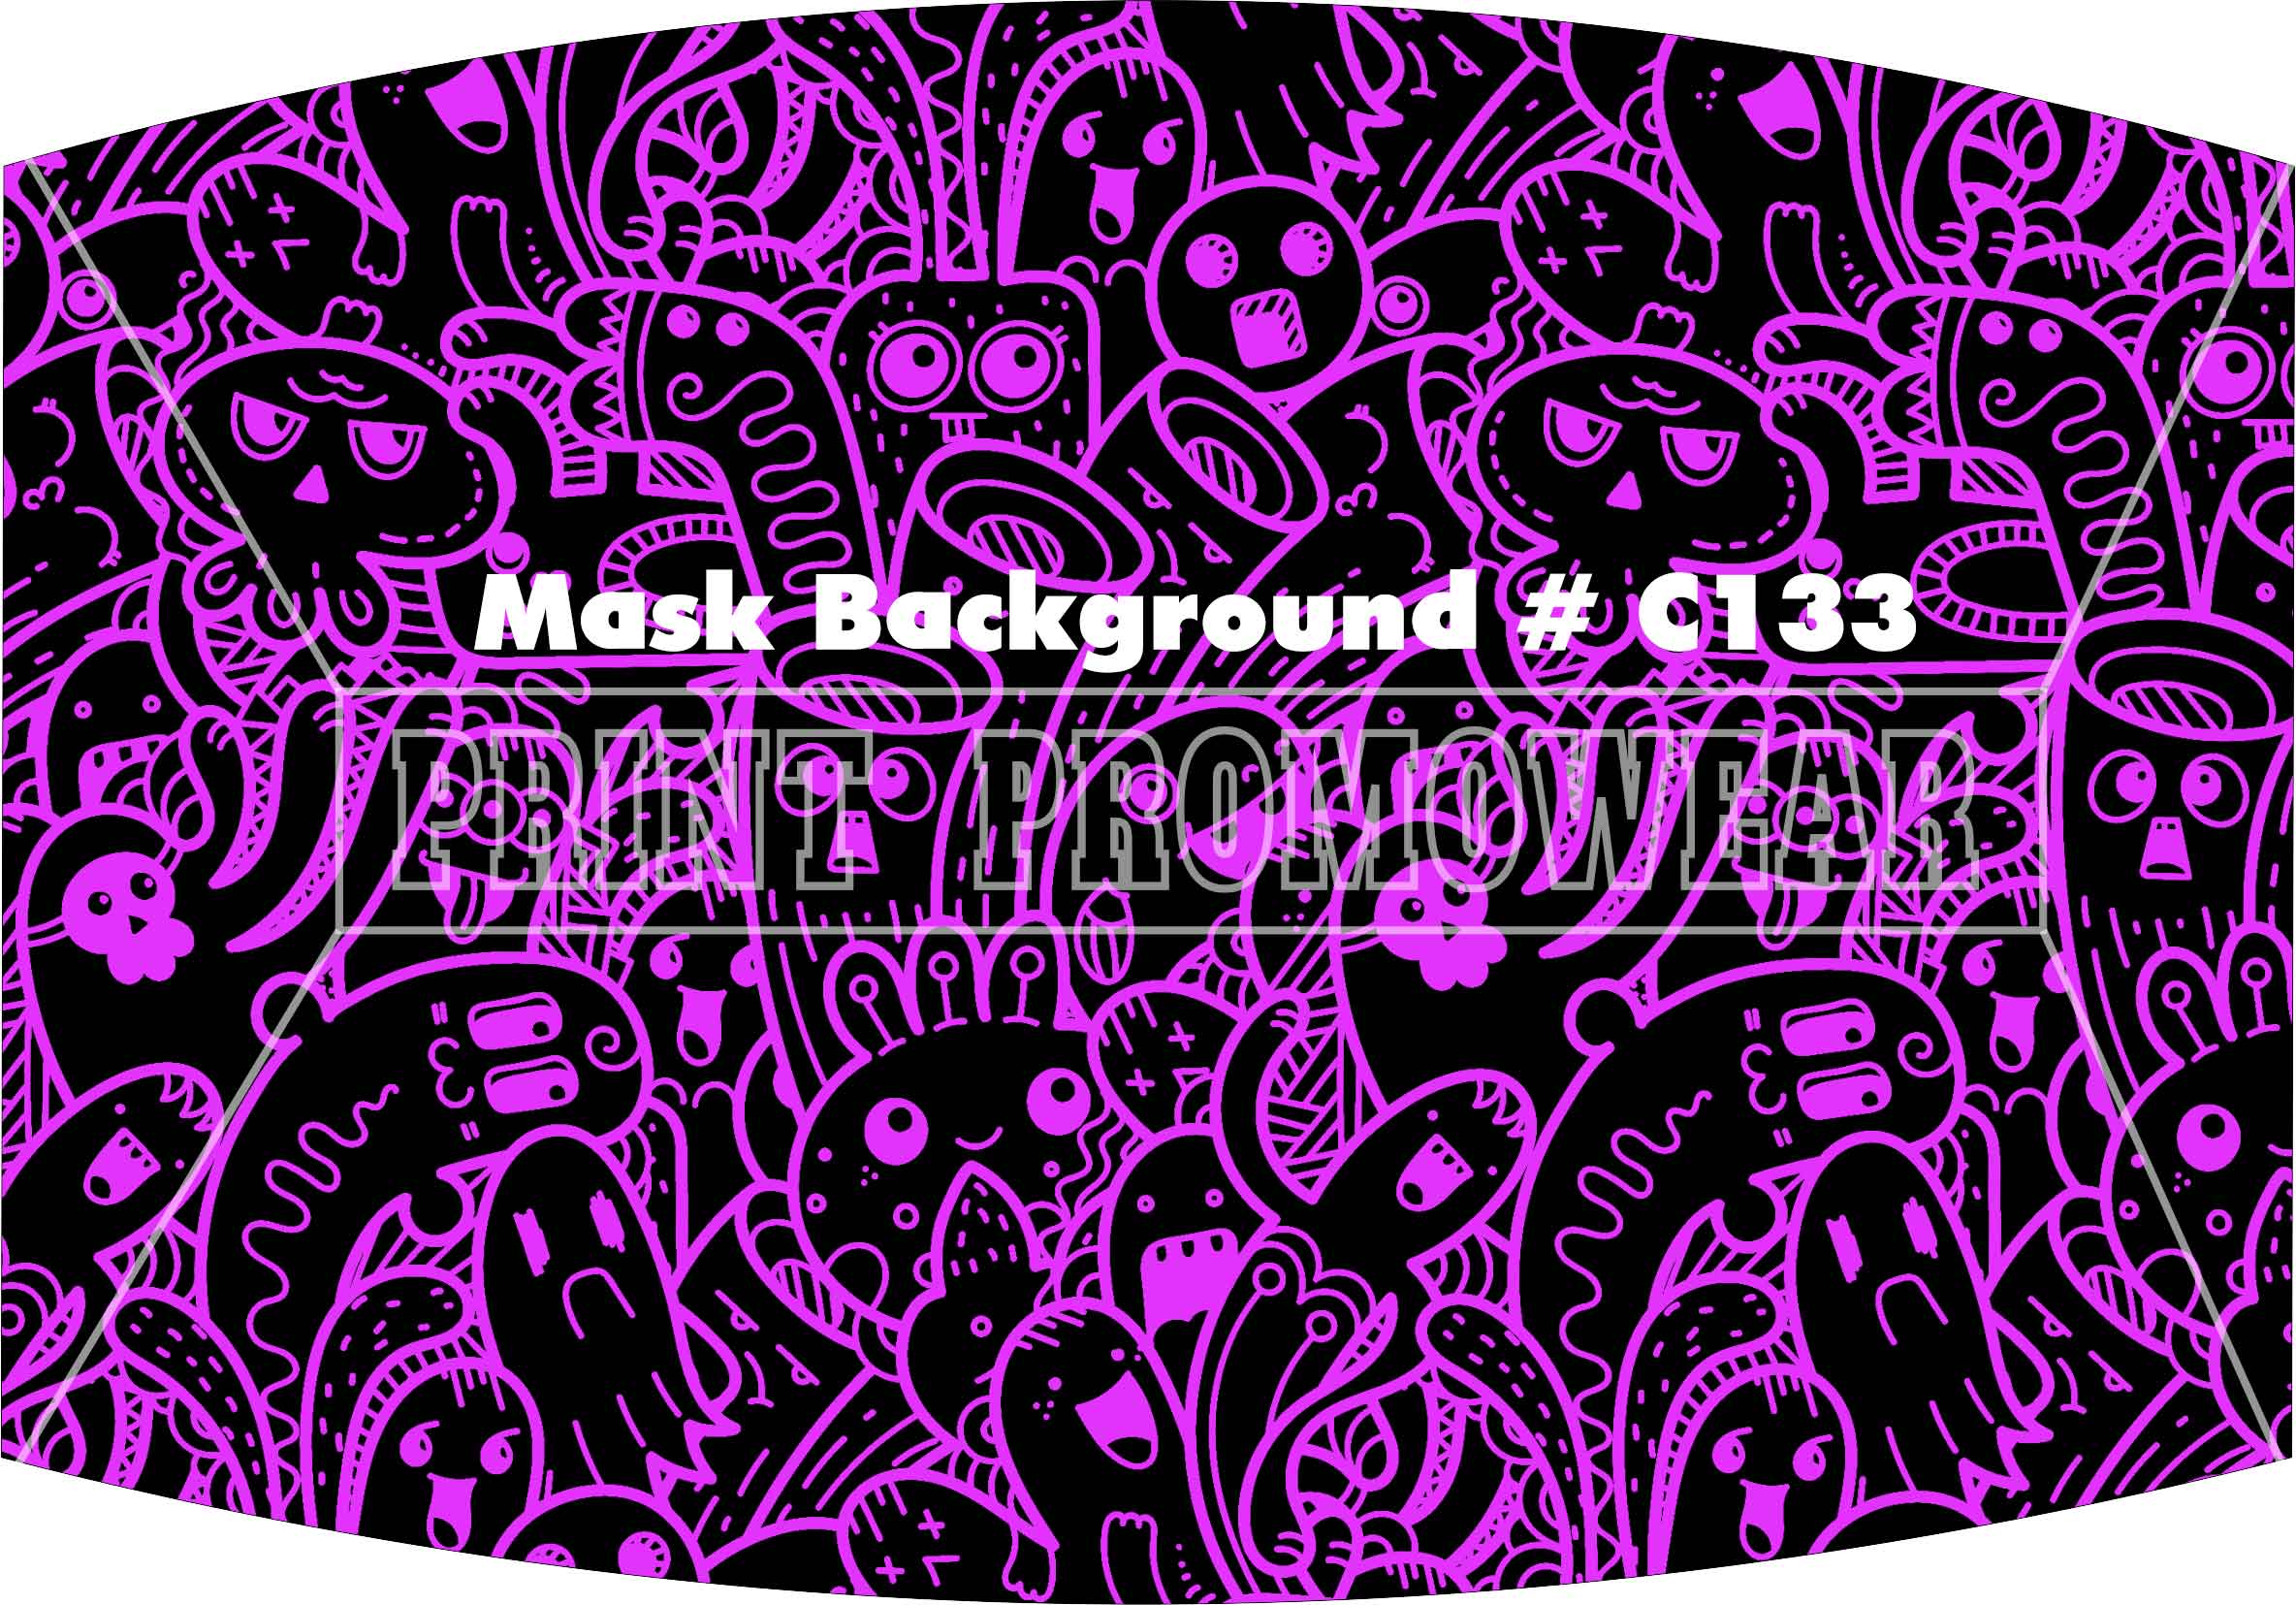 Image/MaskBackground/c133.jpg